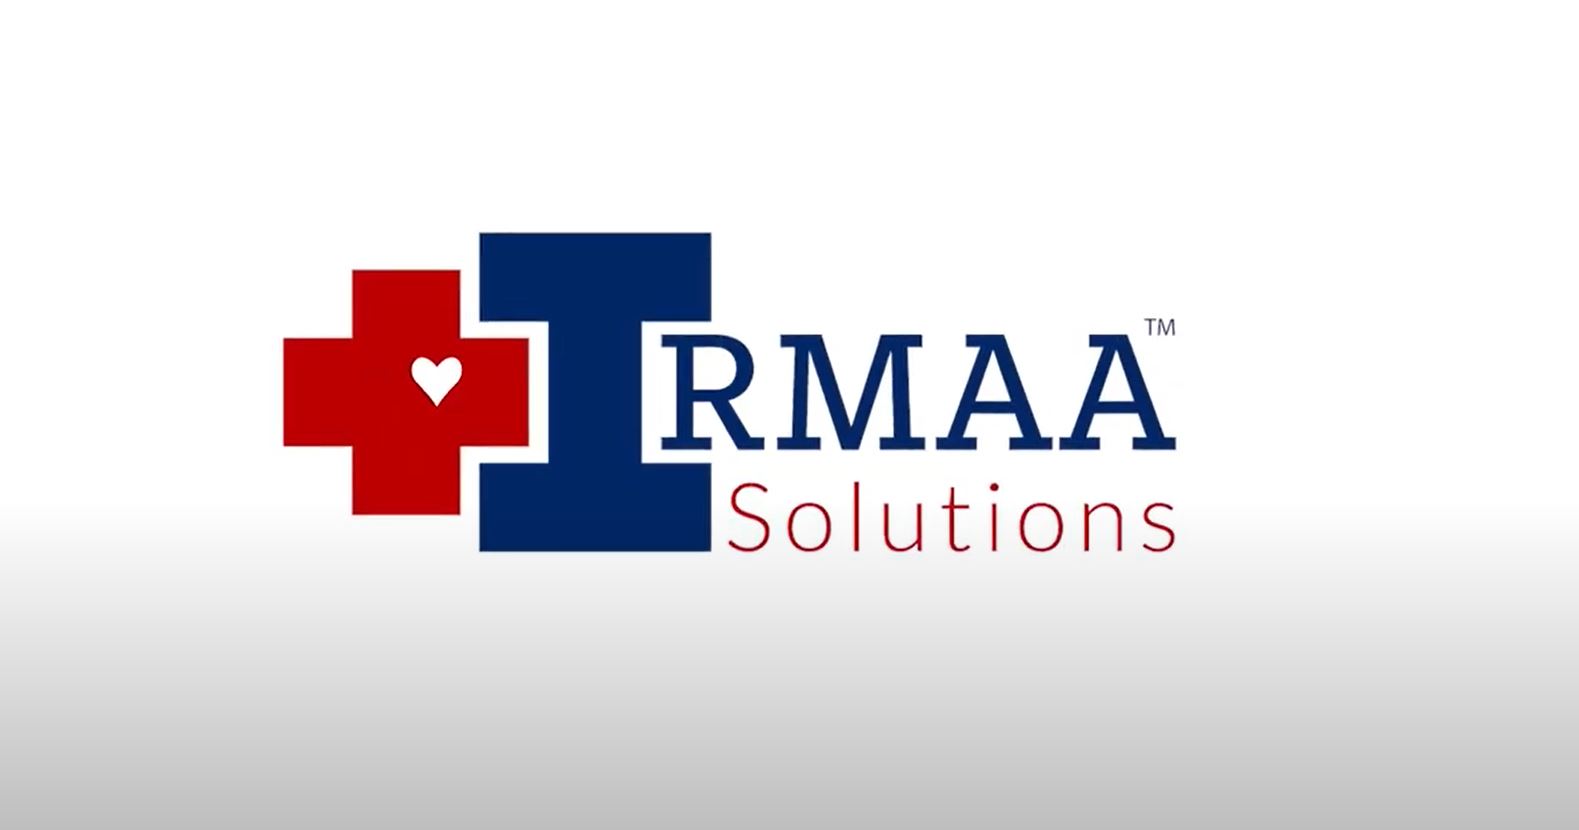 IRMAA Solutions